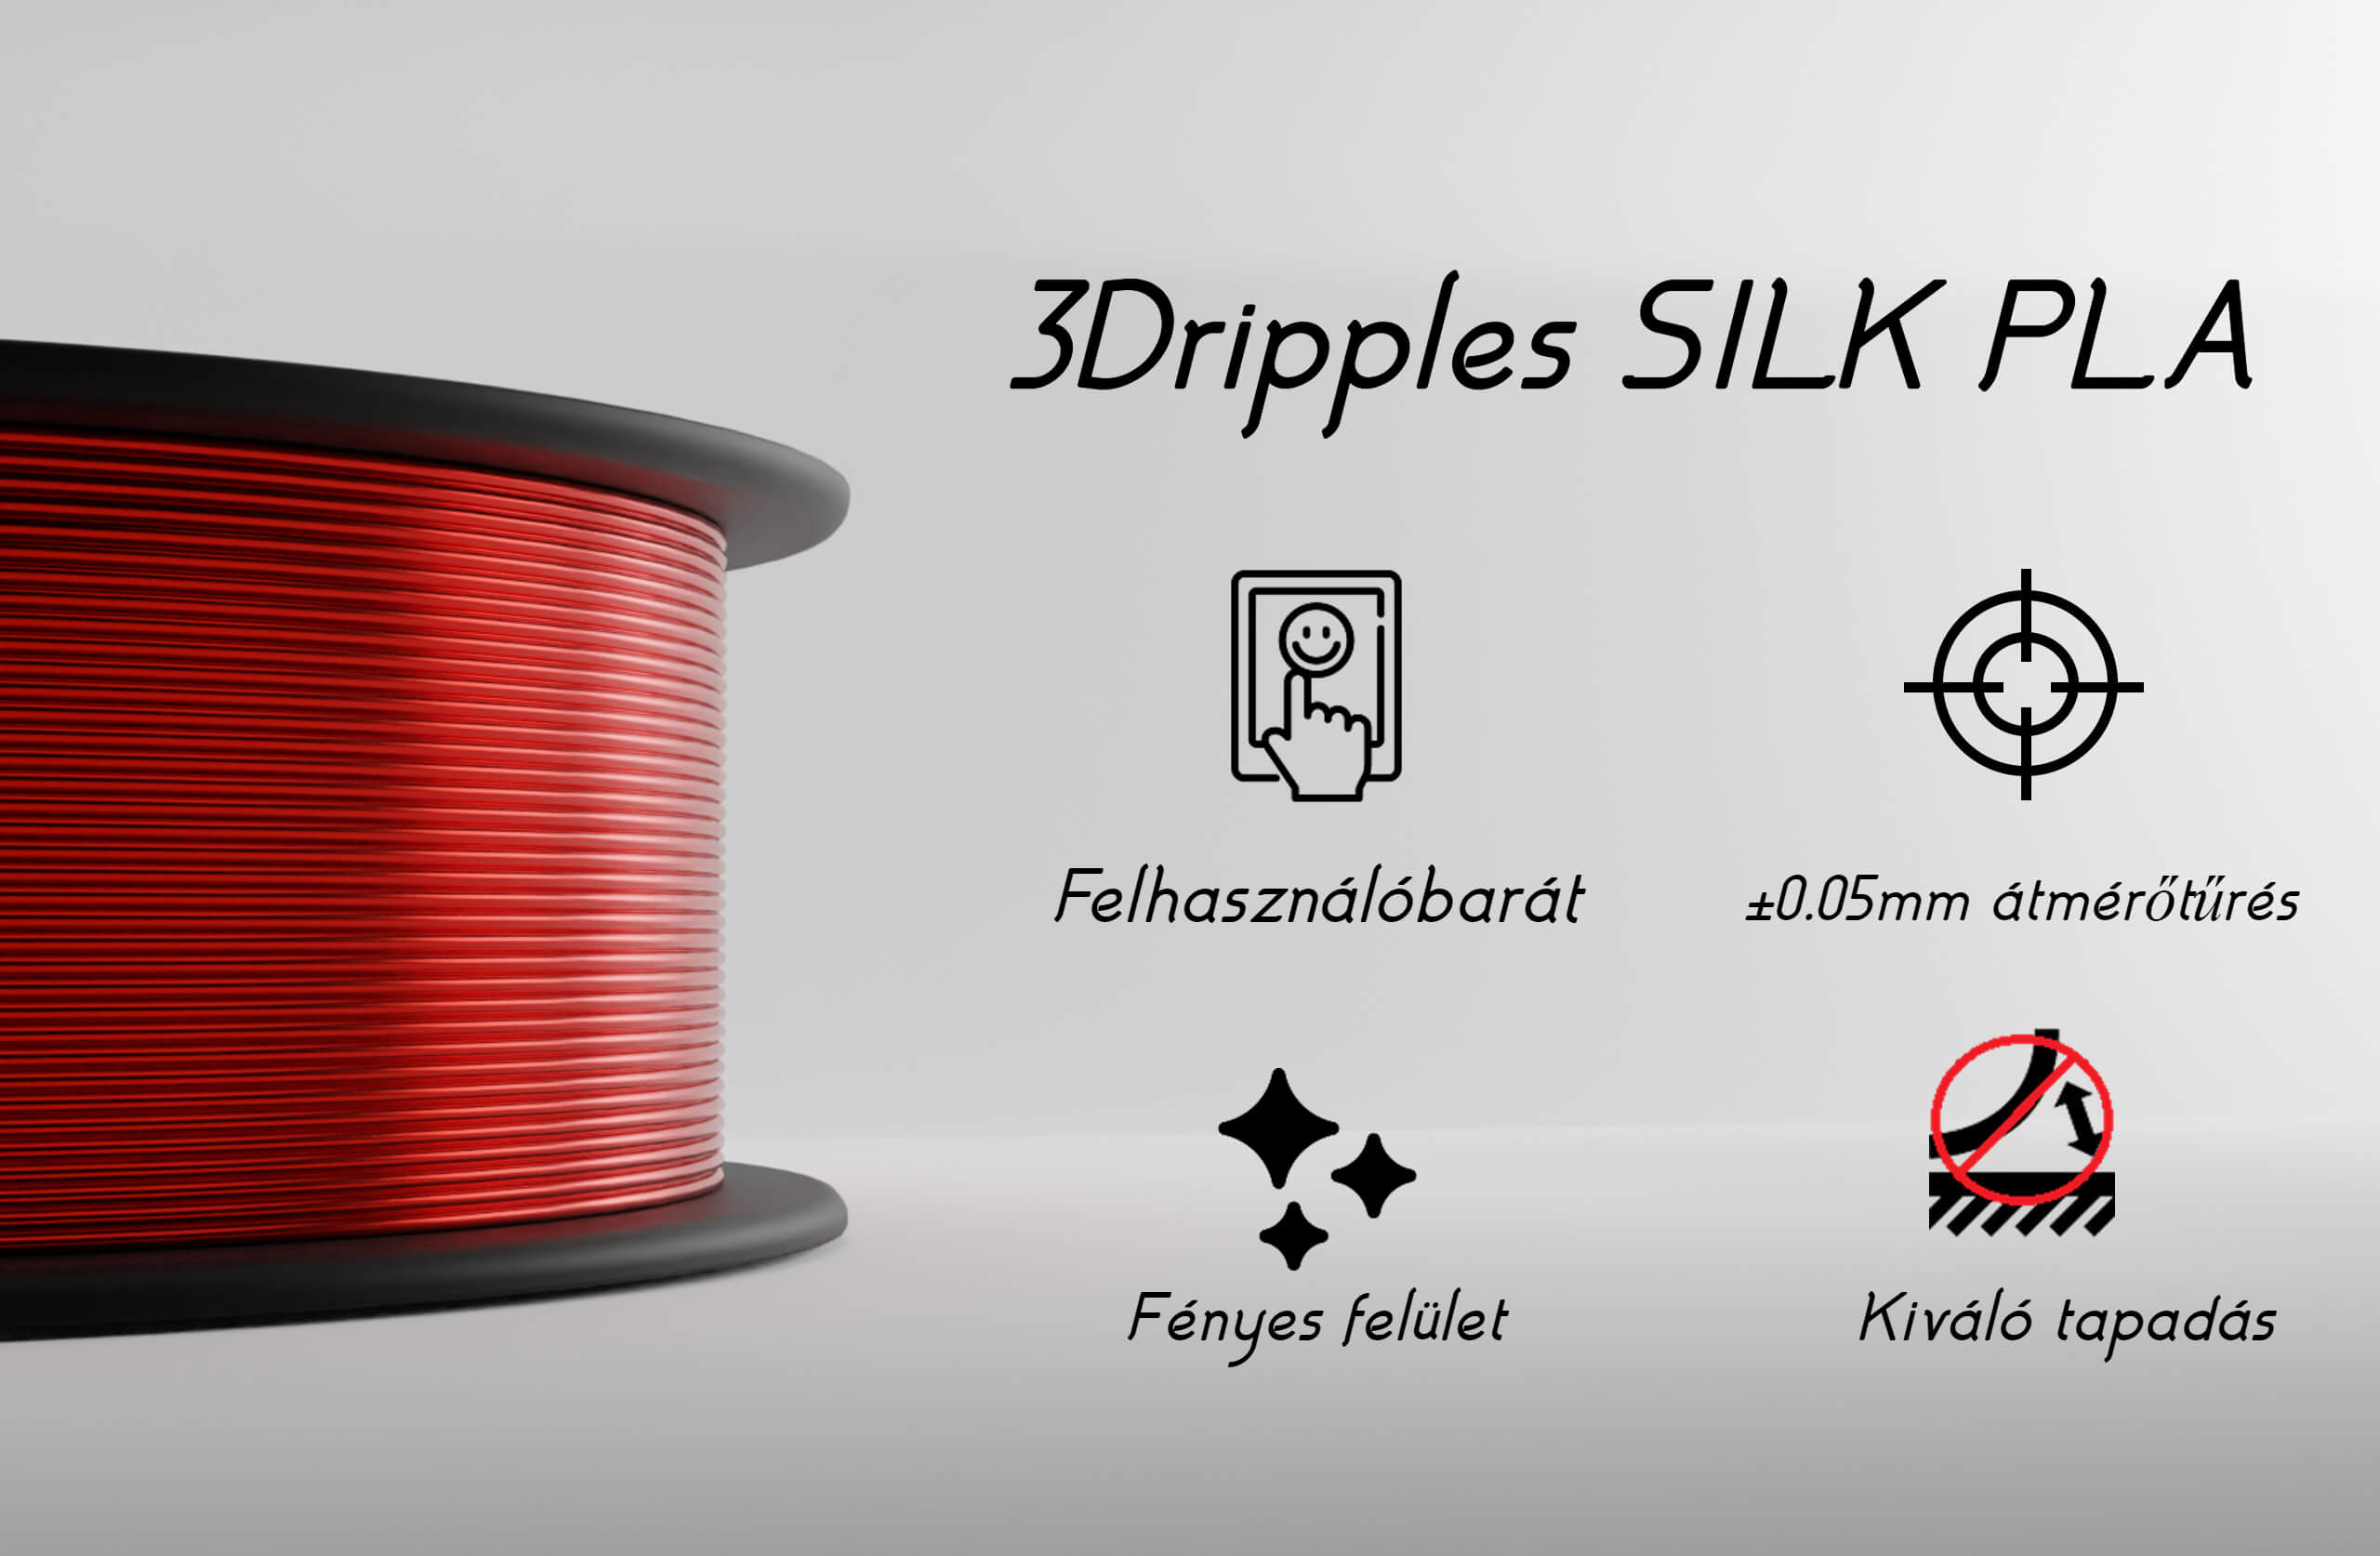 3Dripples Silk PLA